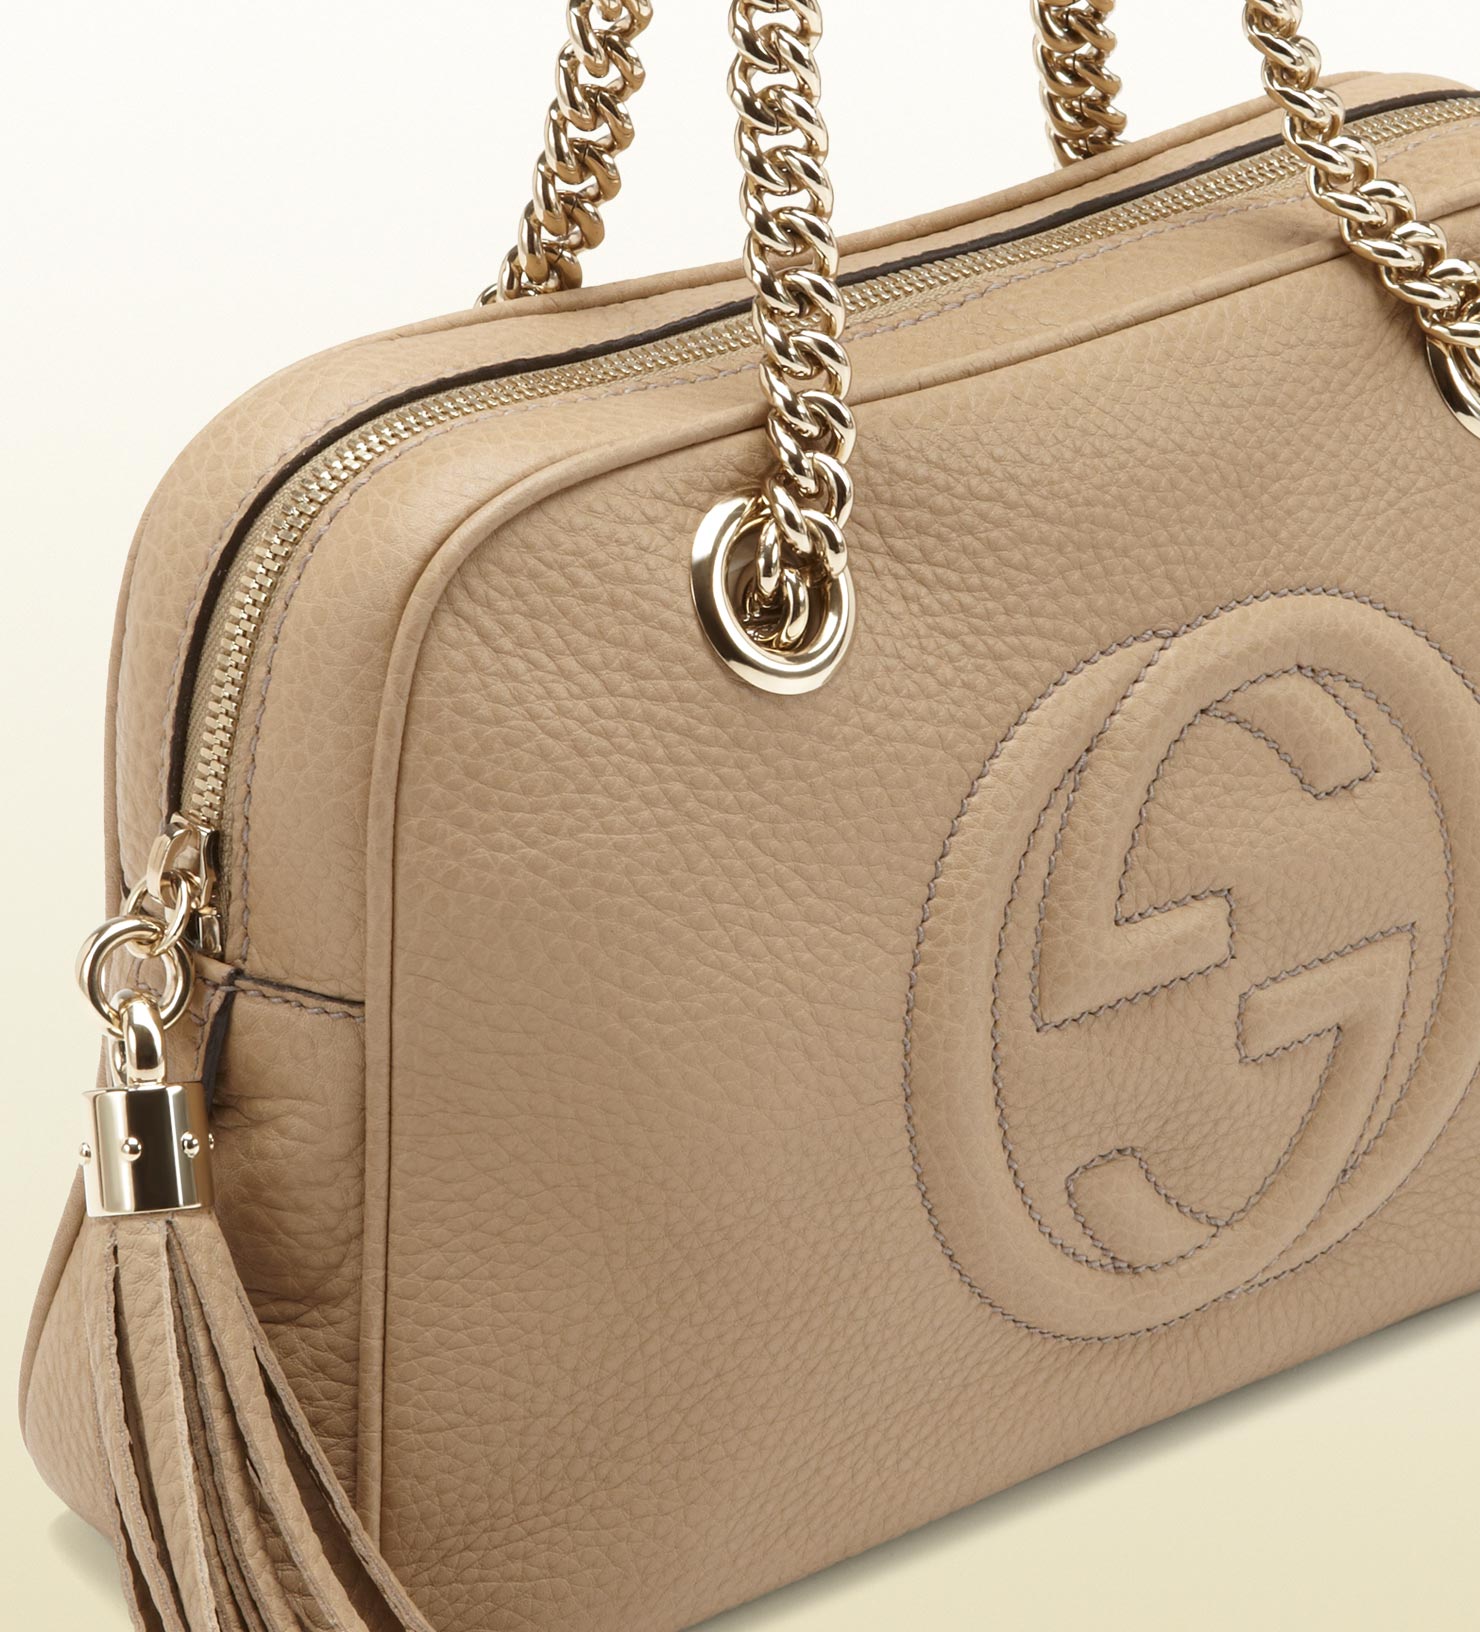 Lyst - Gucci Soho Leather Shoulder Bag in Natural